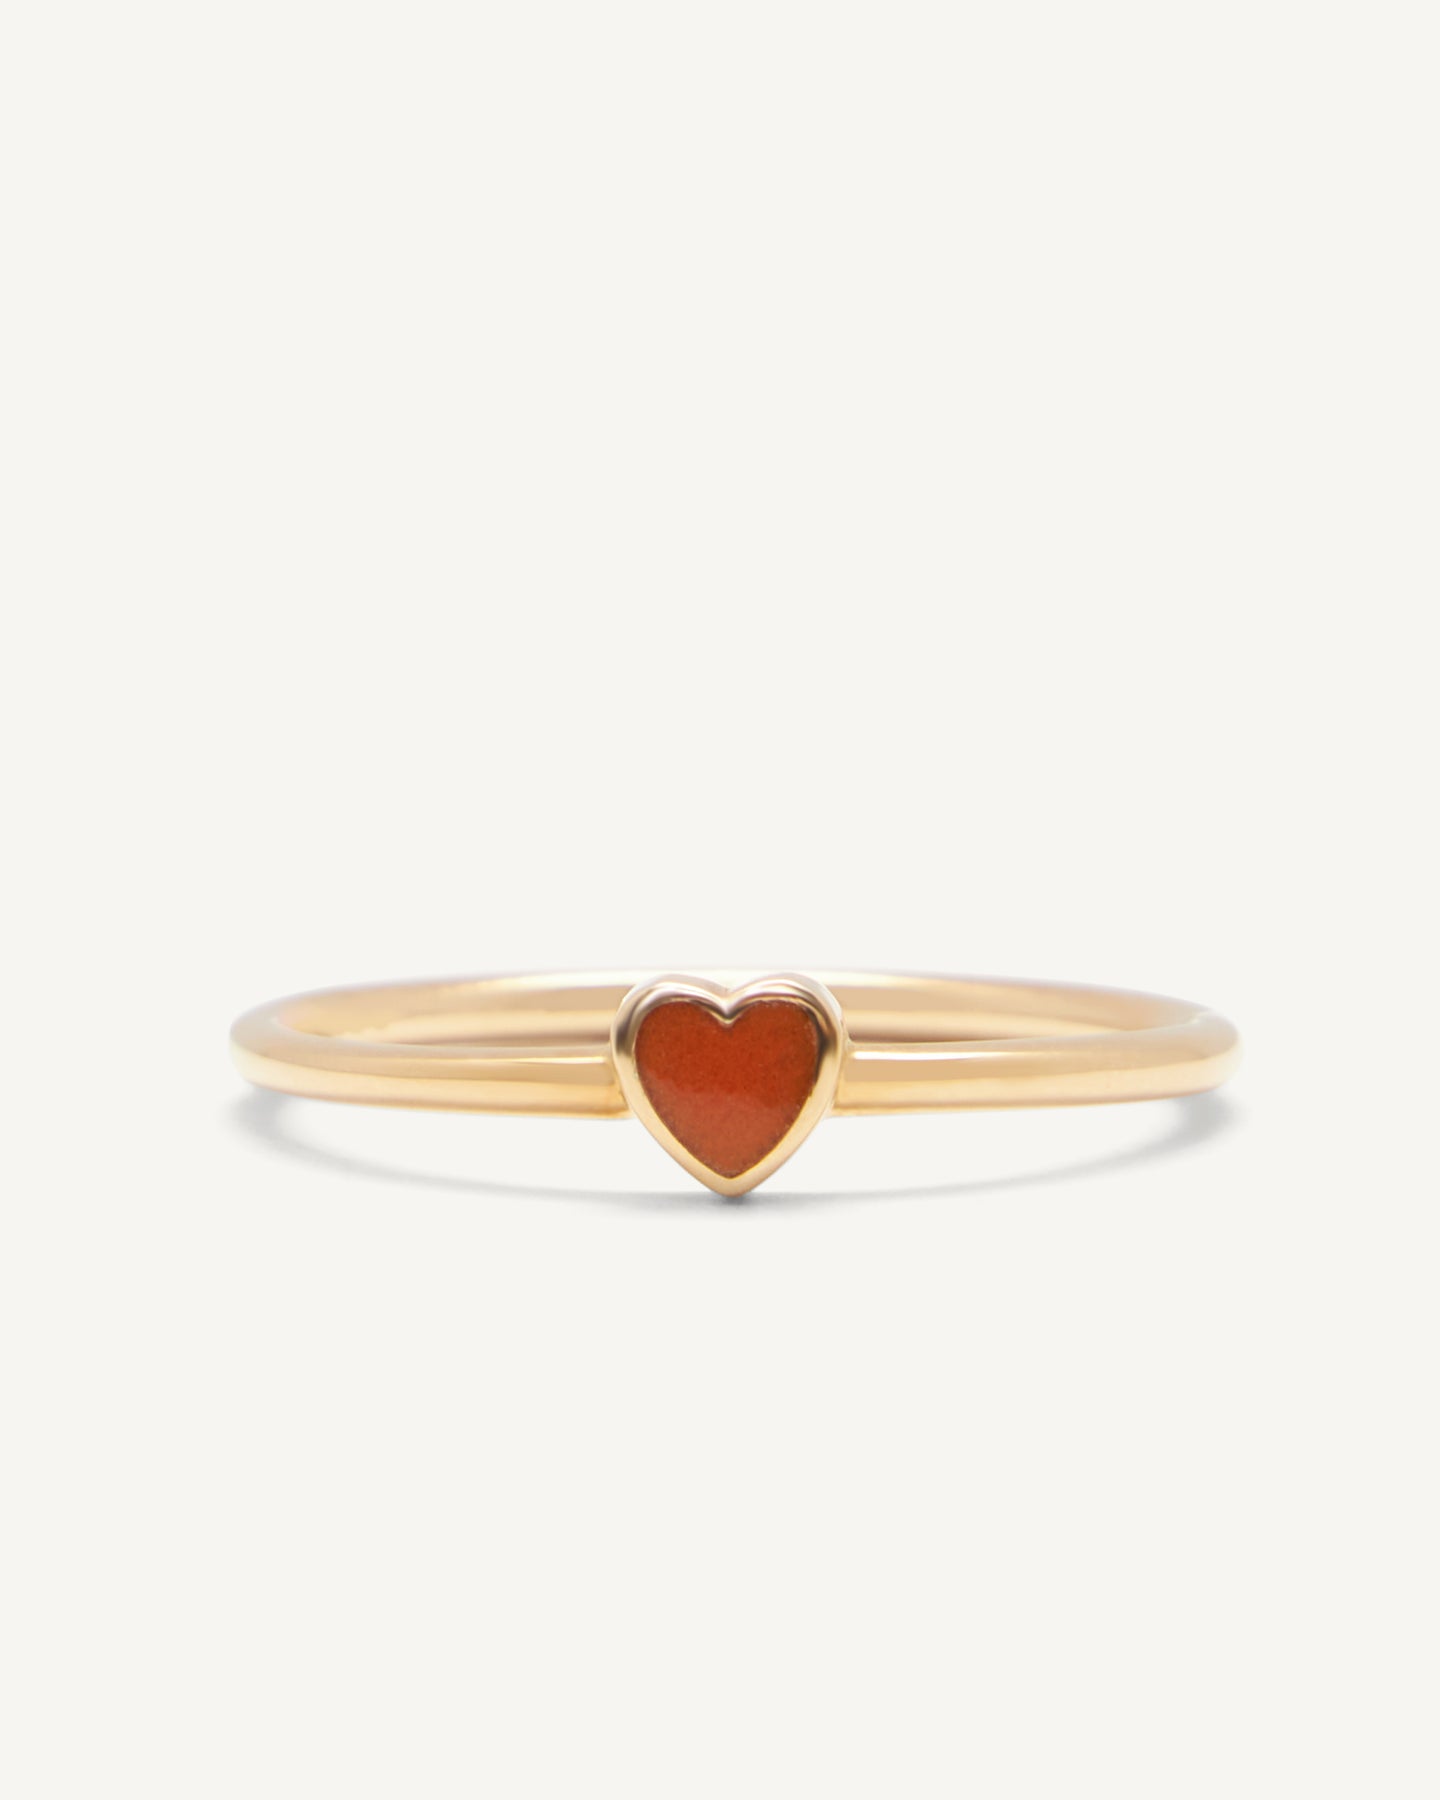 Heart Ring – Gold & Enamel